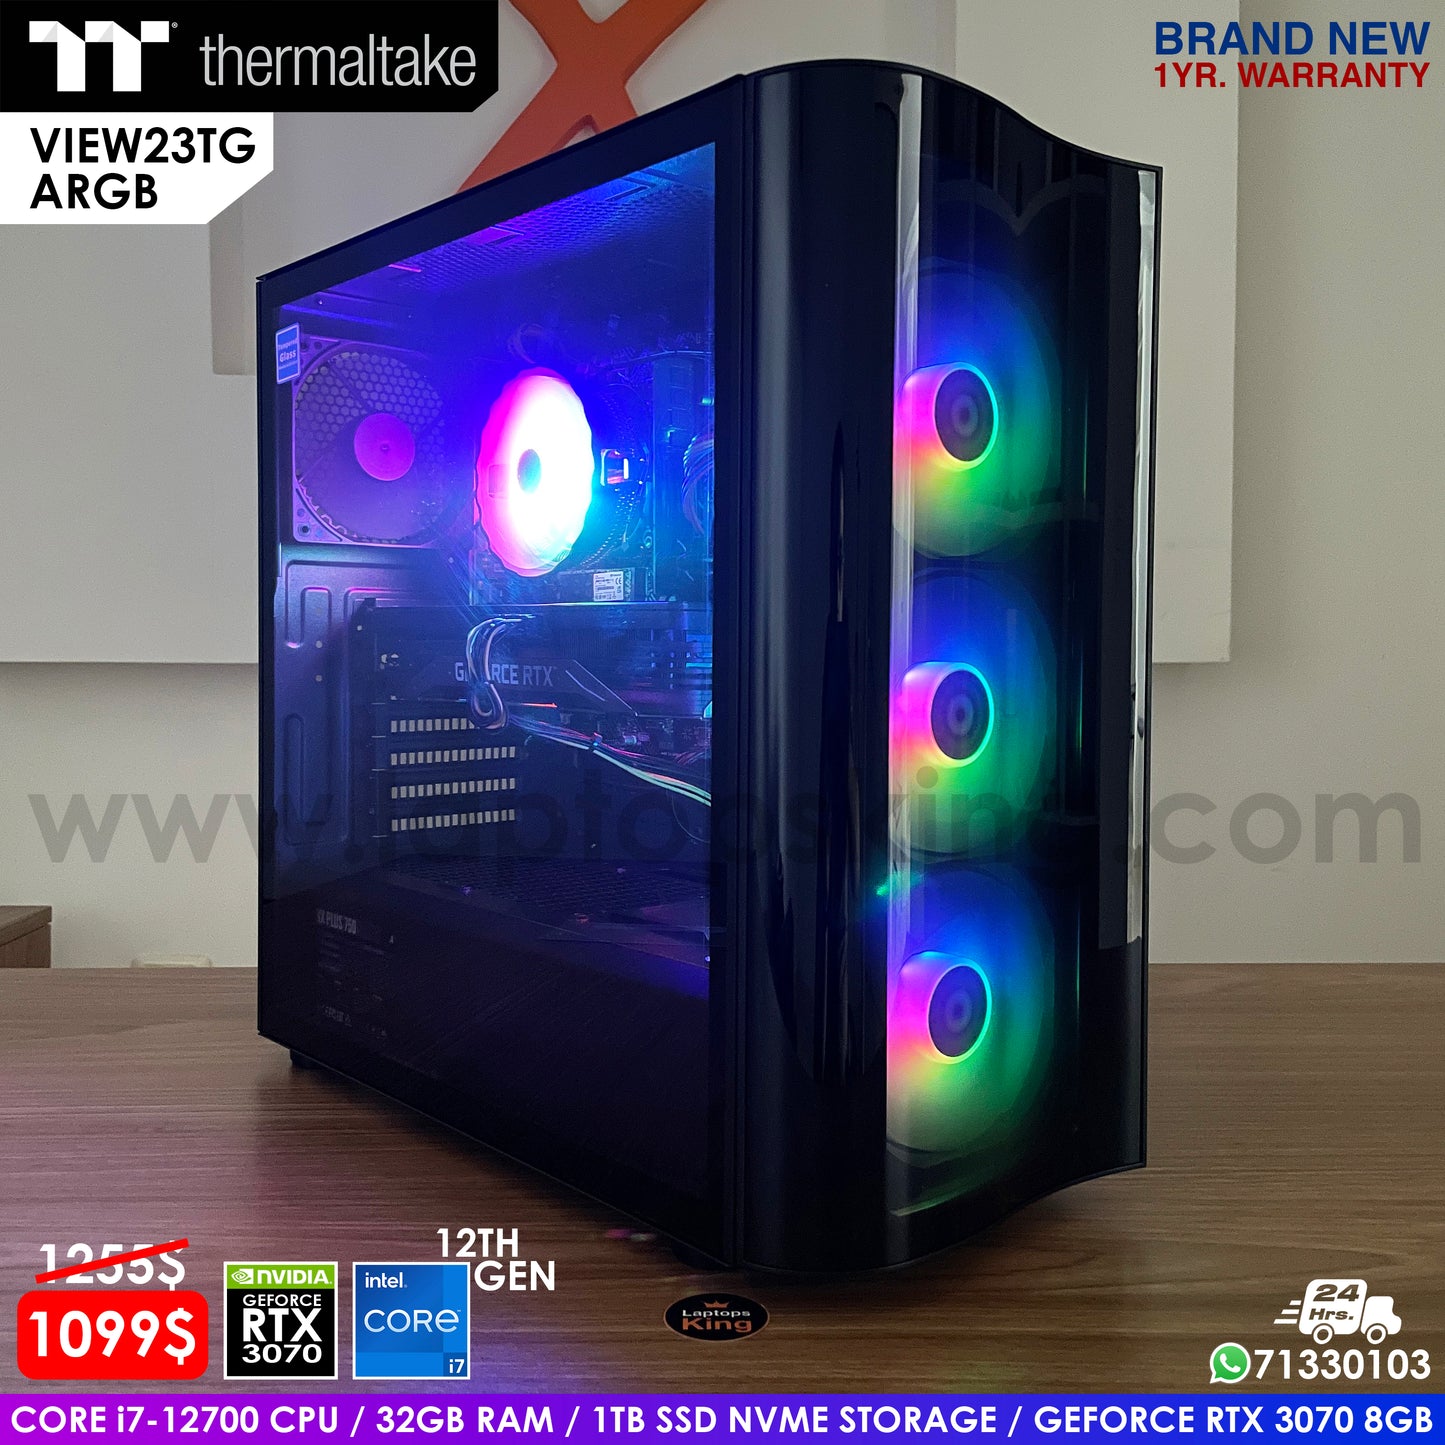 Thermaltake VIEW23TG ARGB Core i7-12700 Rtx 3070 Gaming Desktop (Brand New)